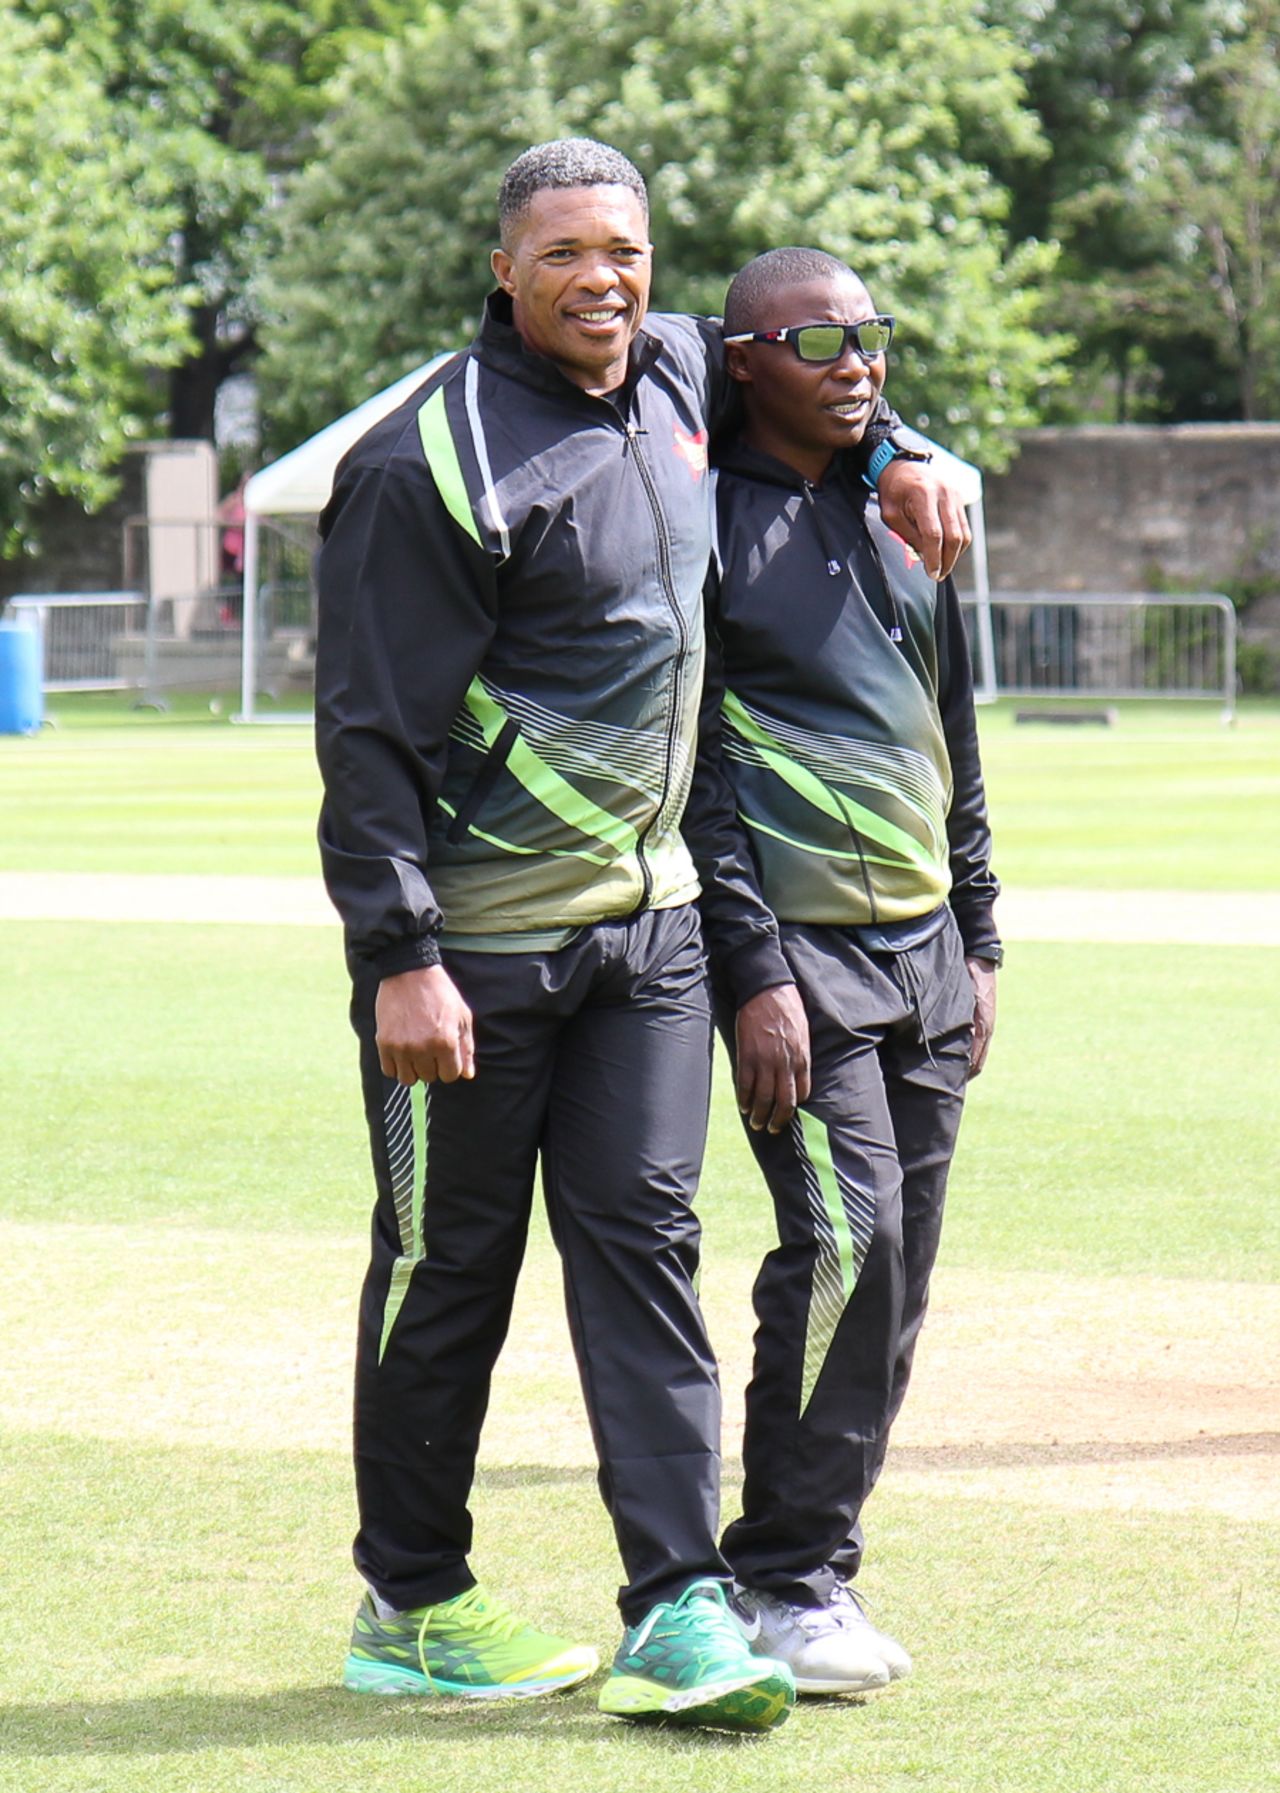 Zimbabwe assistant coach Makhaya Ntini has a stroll on the outfield before the toss, Scotland v Zimbabwe, 1st ODI, Edinburgh, June 15, 2017